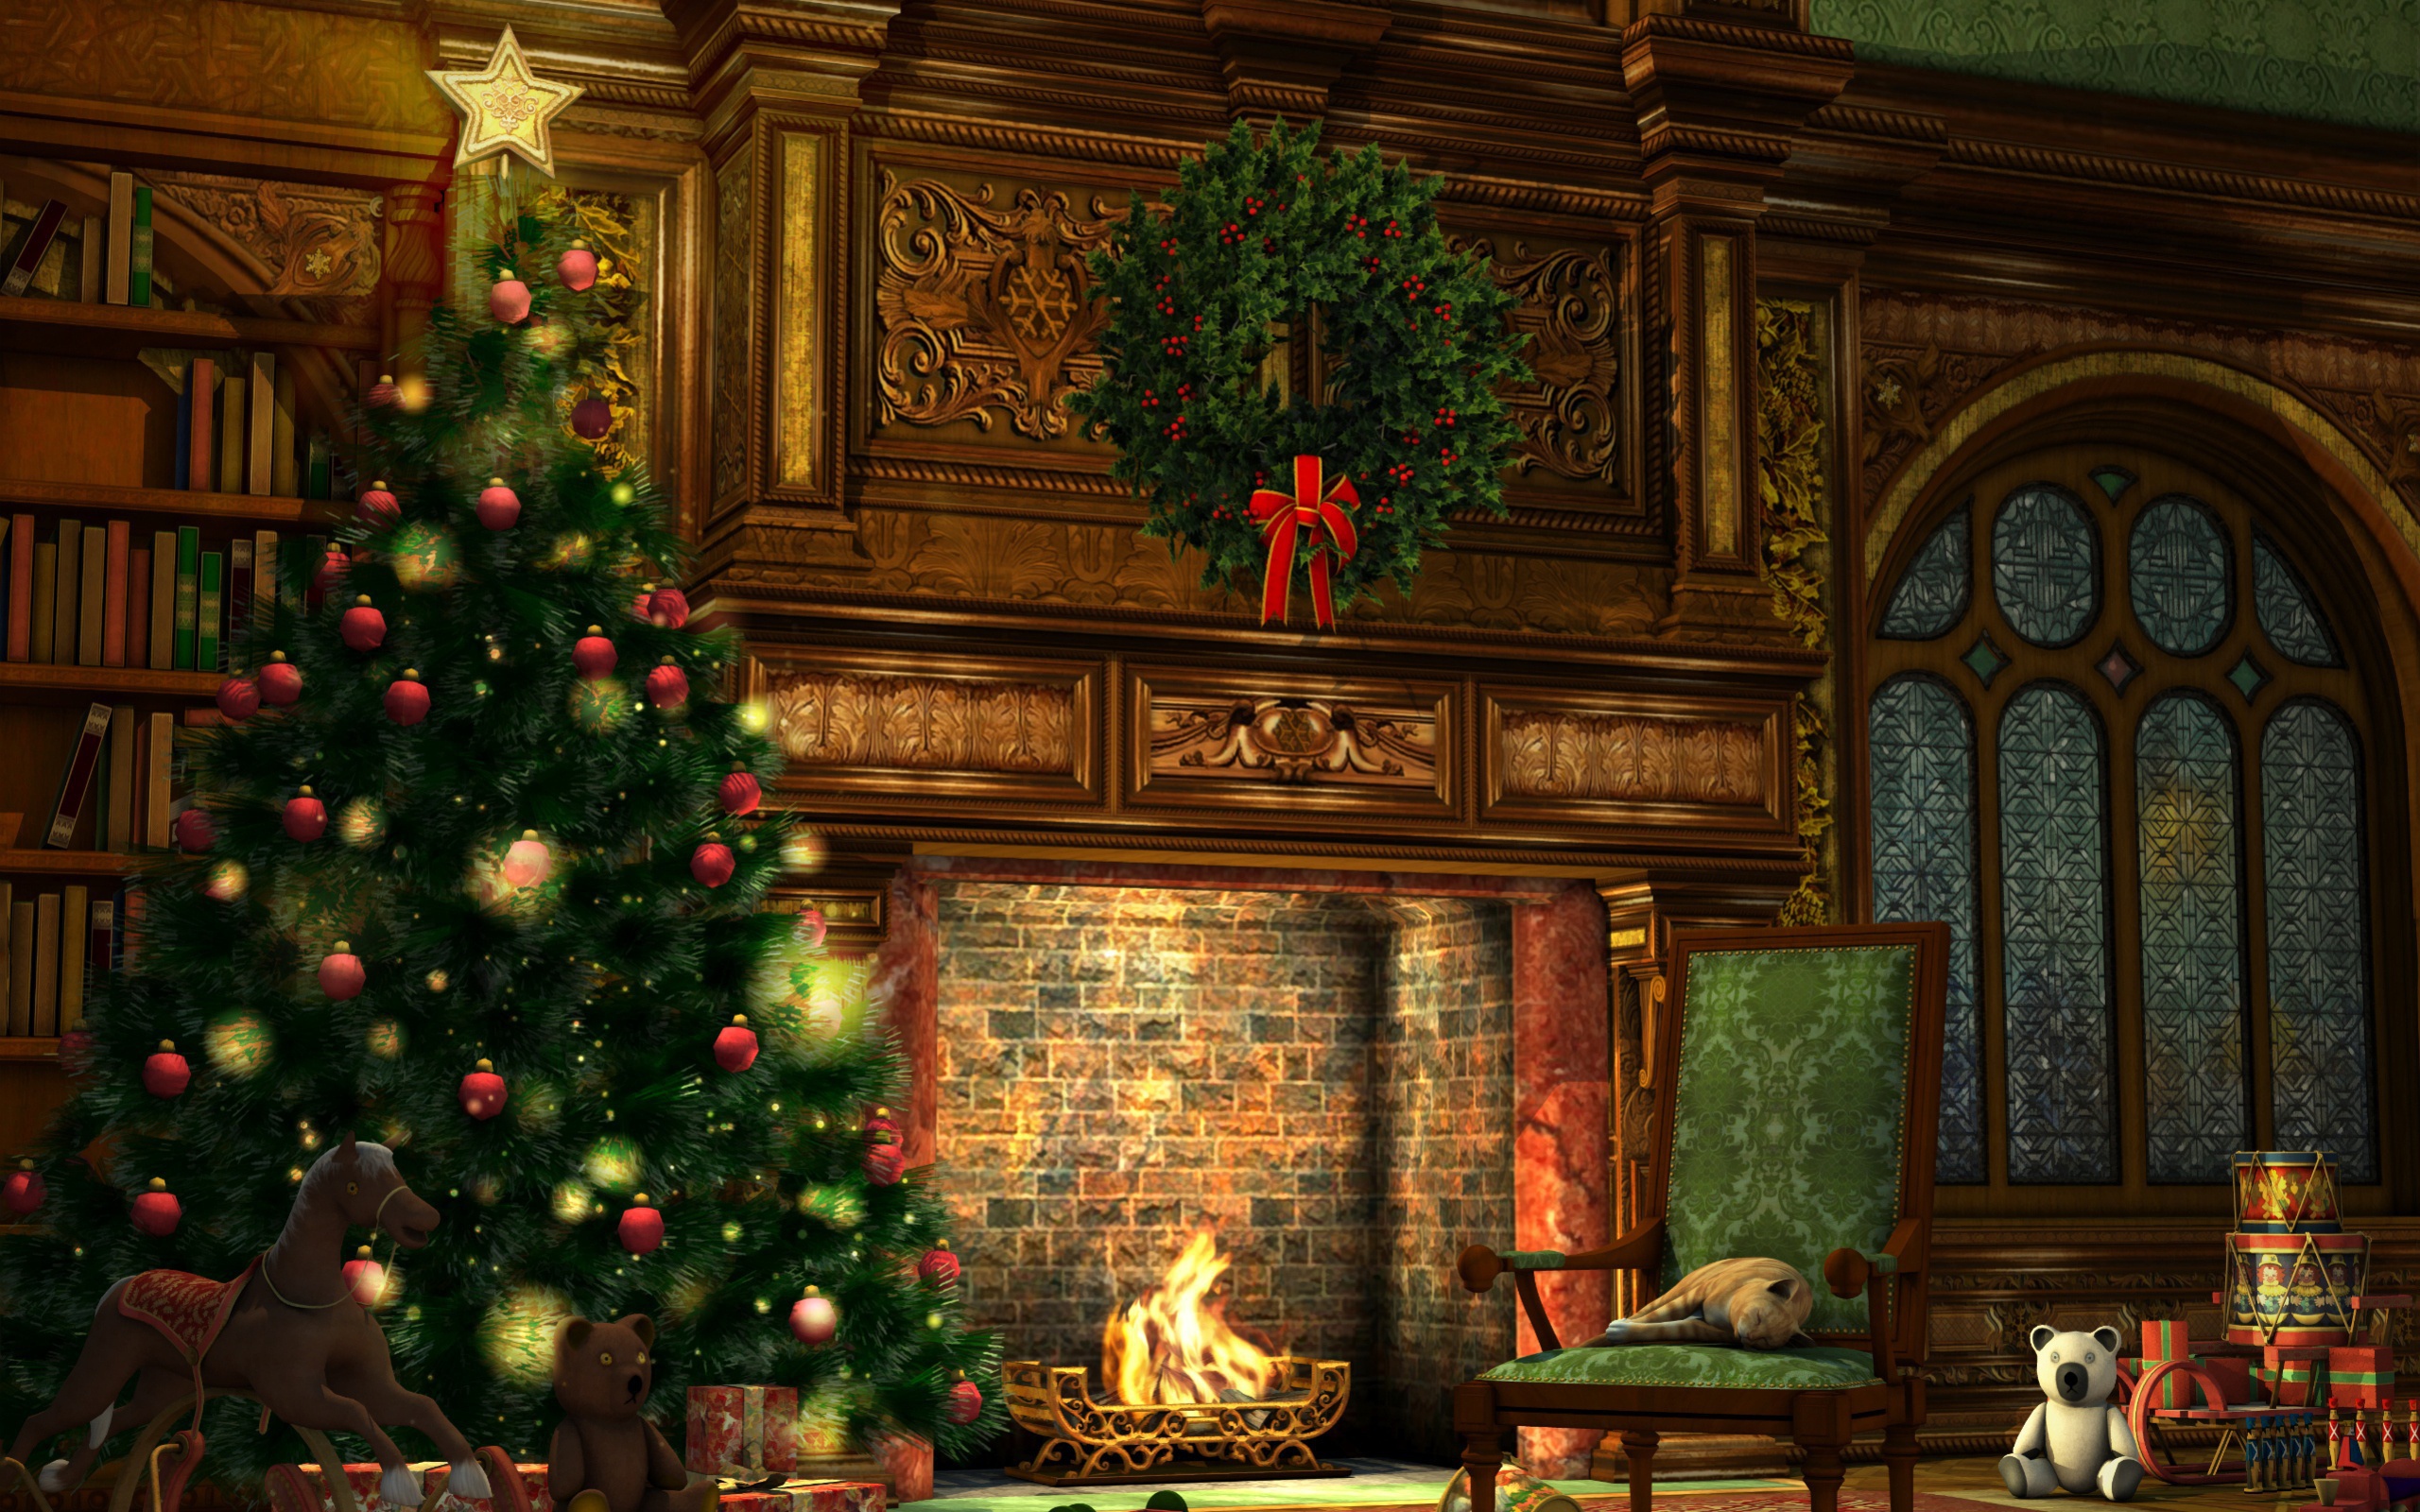 Christmas fir-tree at a fireplace